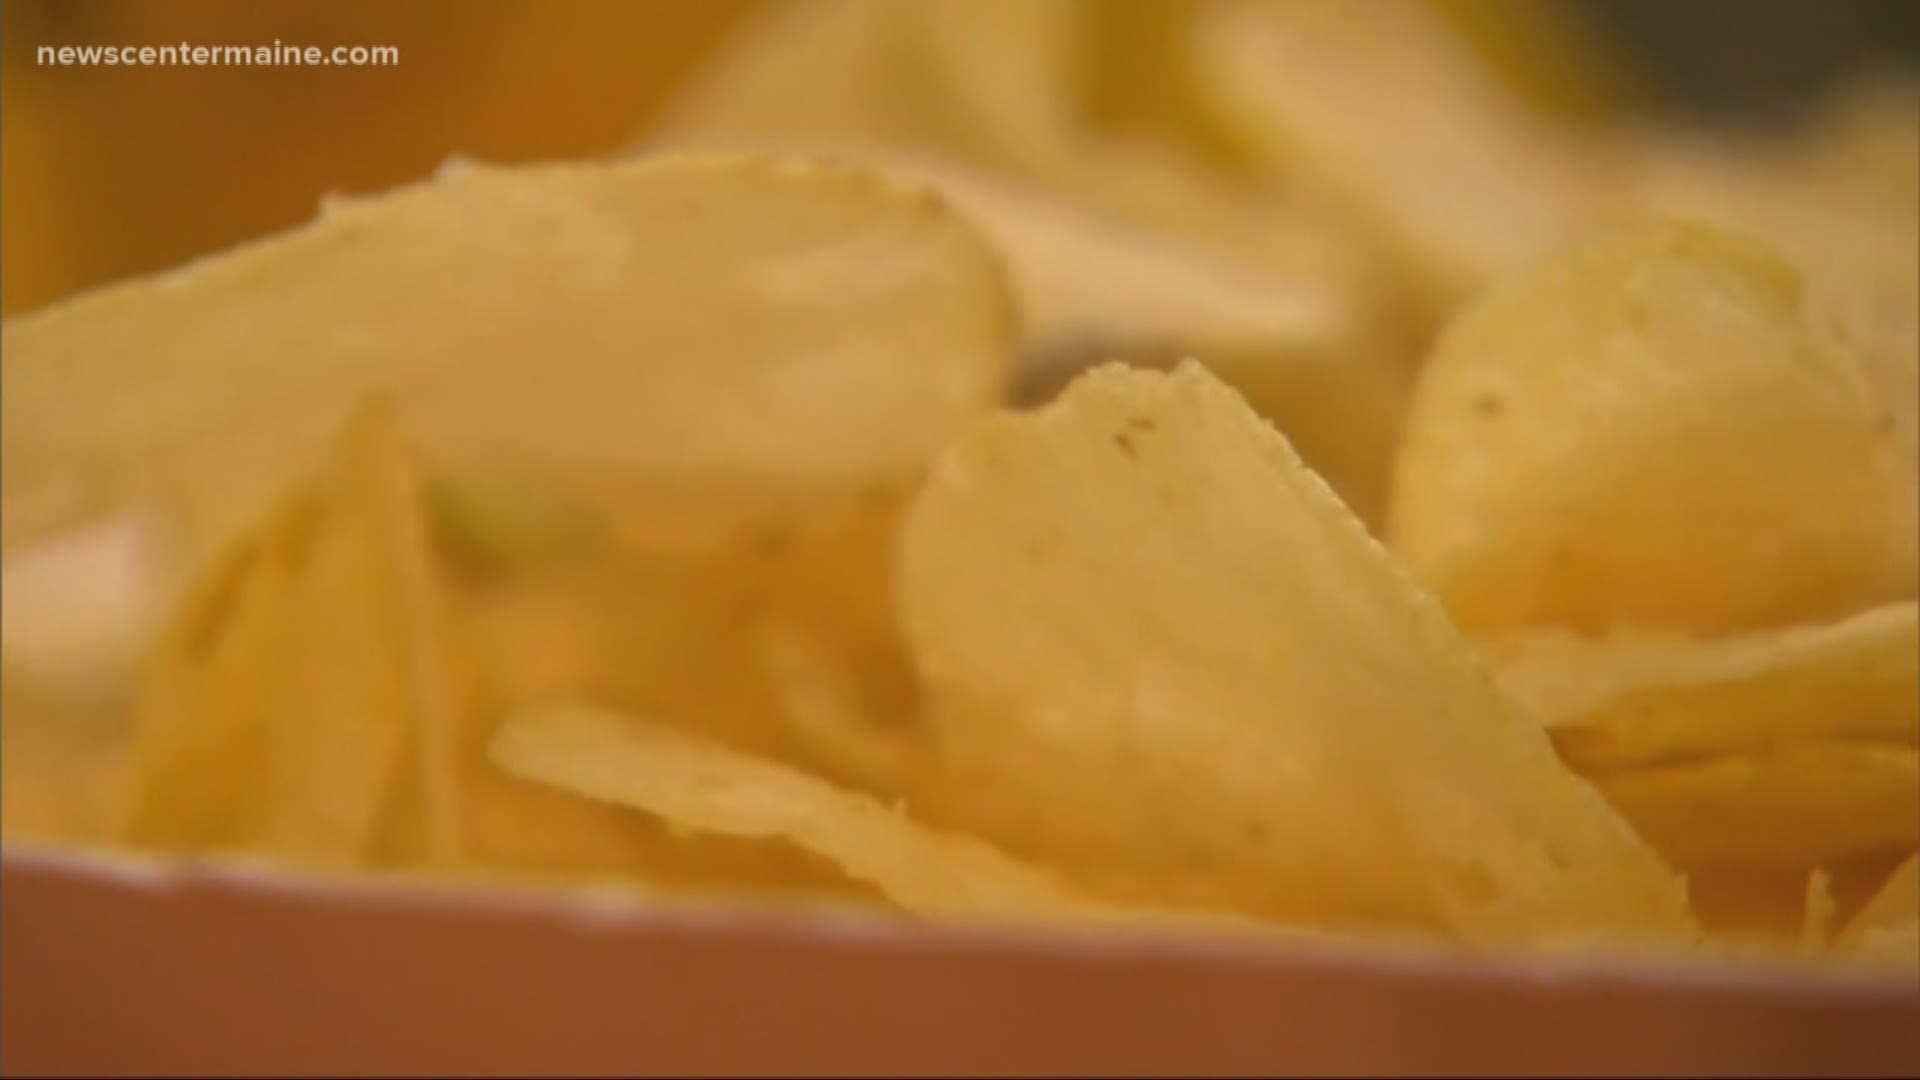 Maine's shrinking potato industry